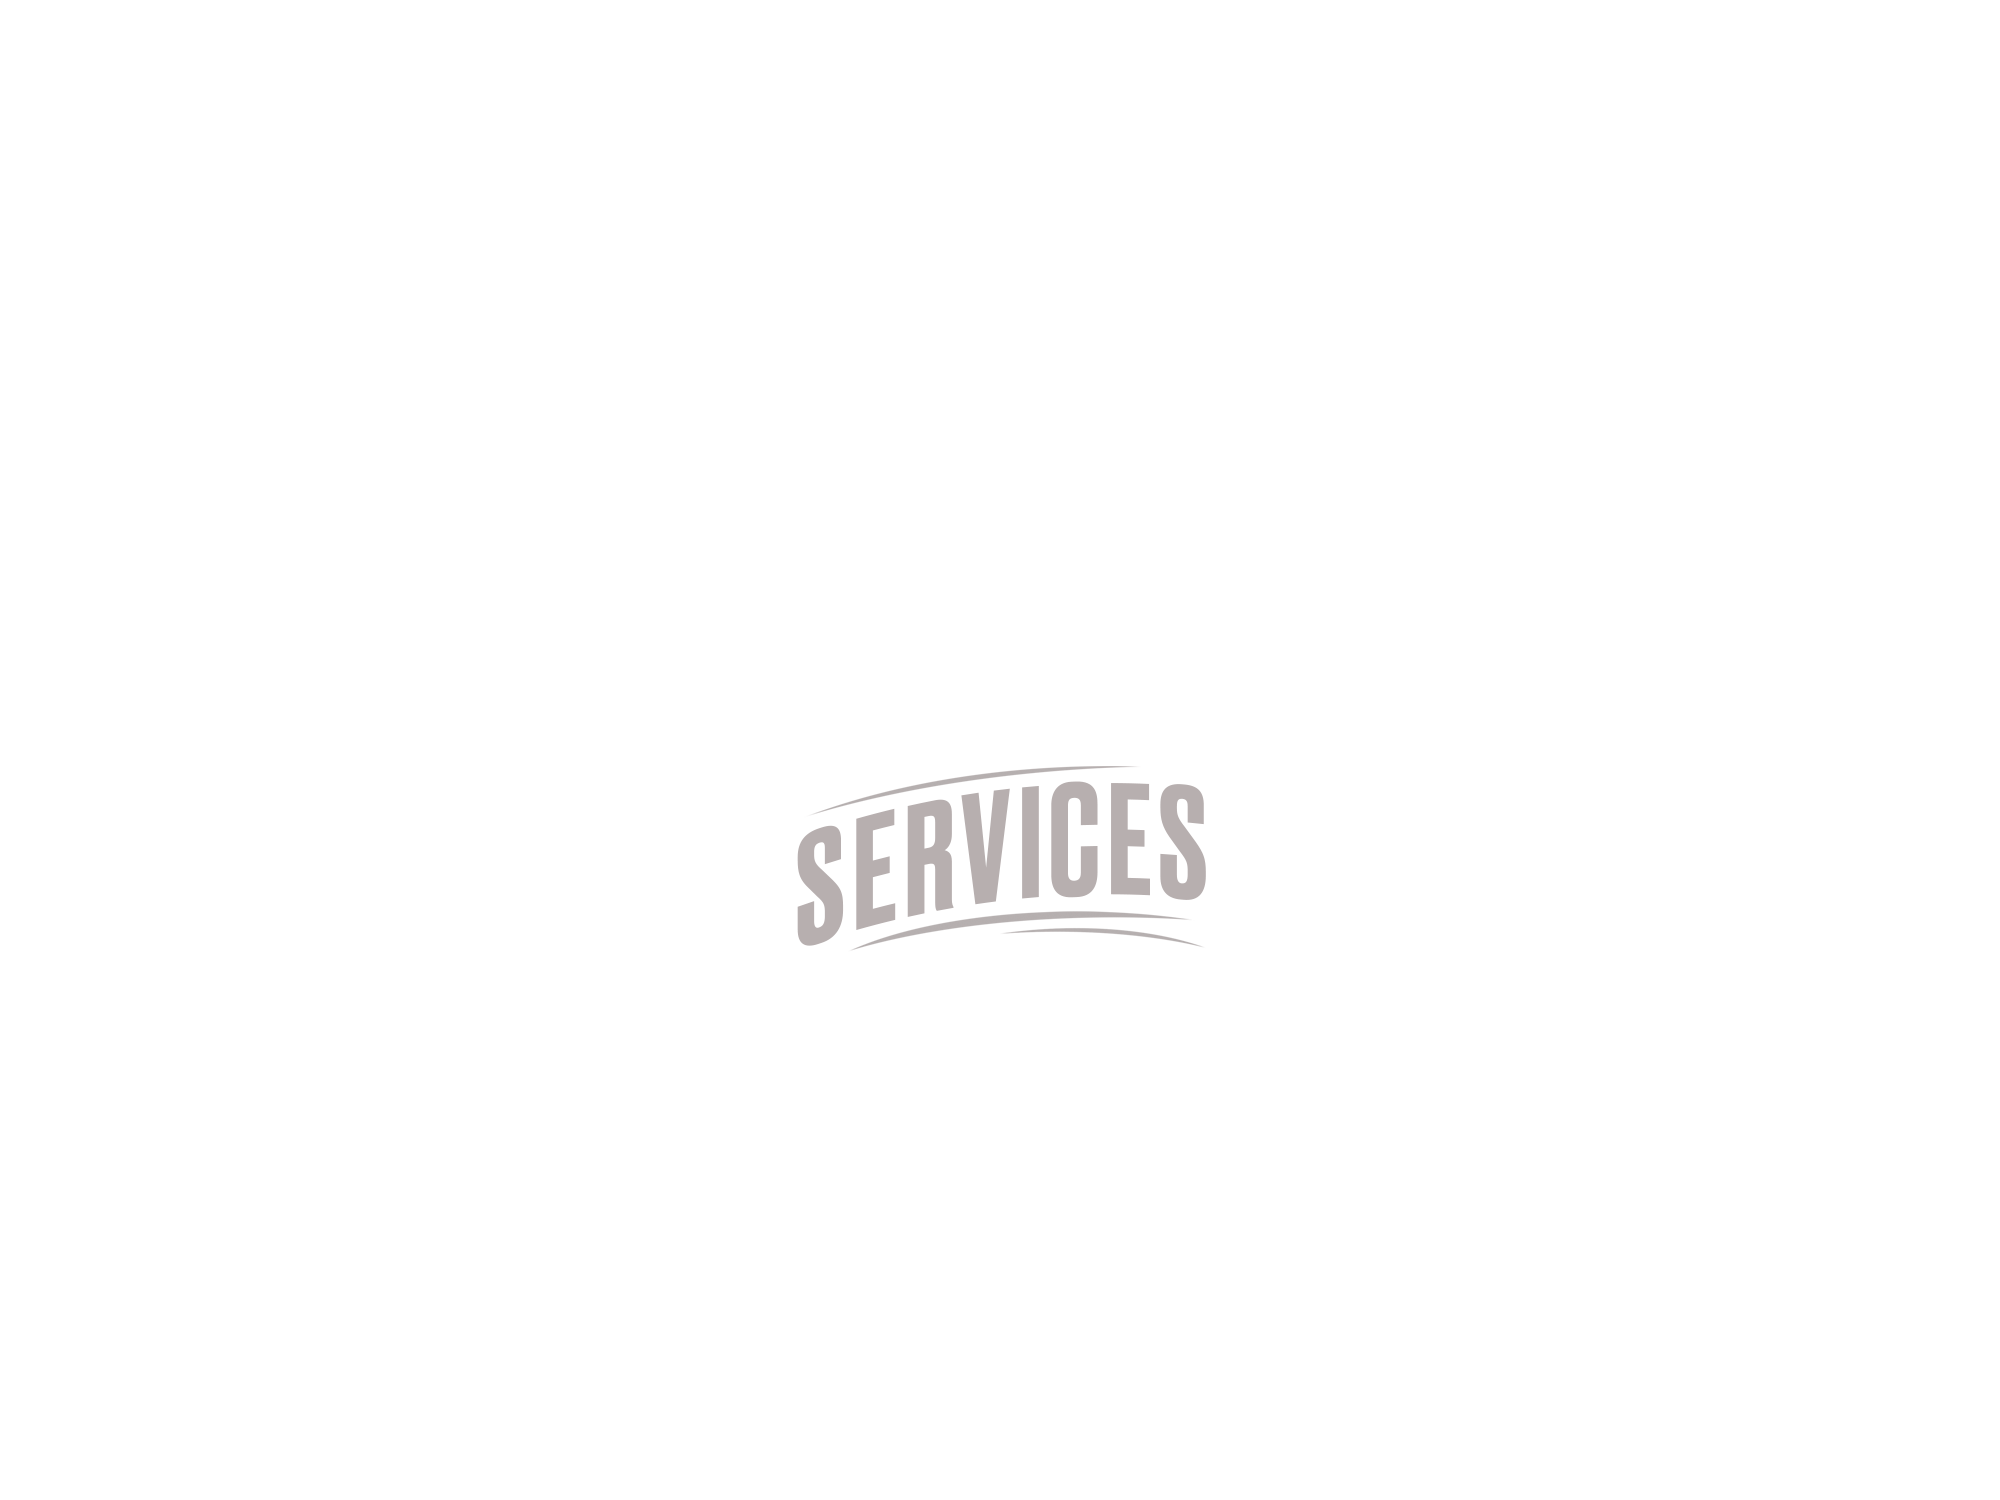 Logo design idea for Keri Diesel Services (Aotearoa New Zealand)